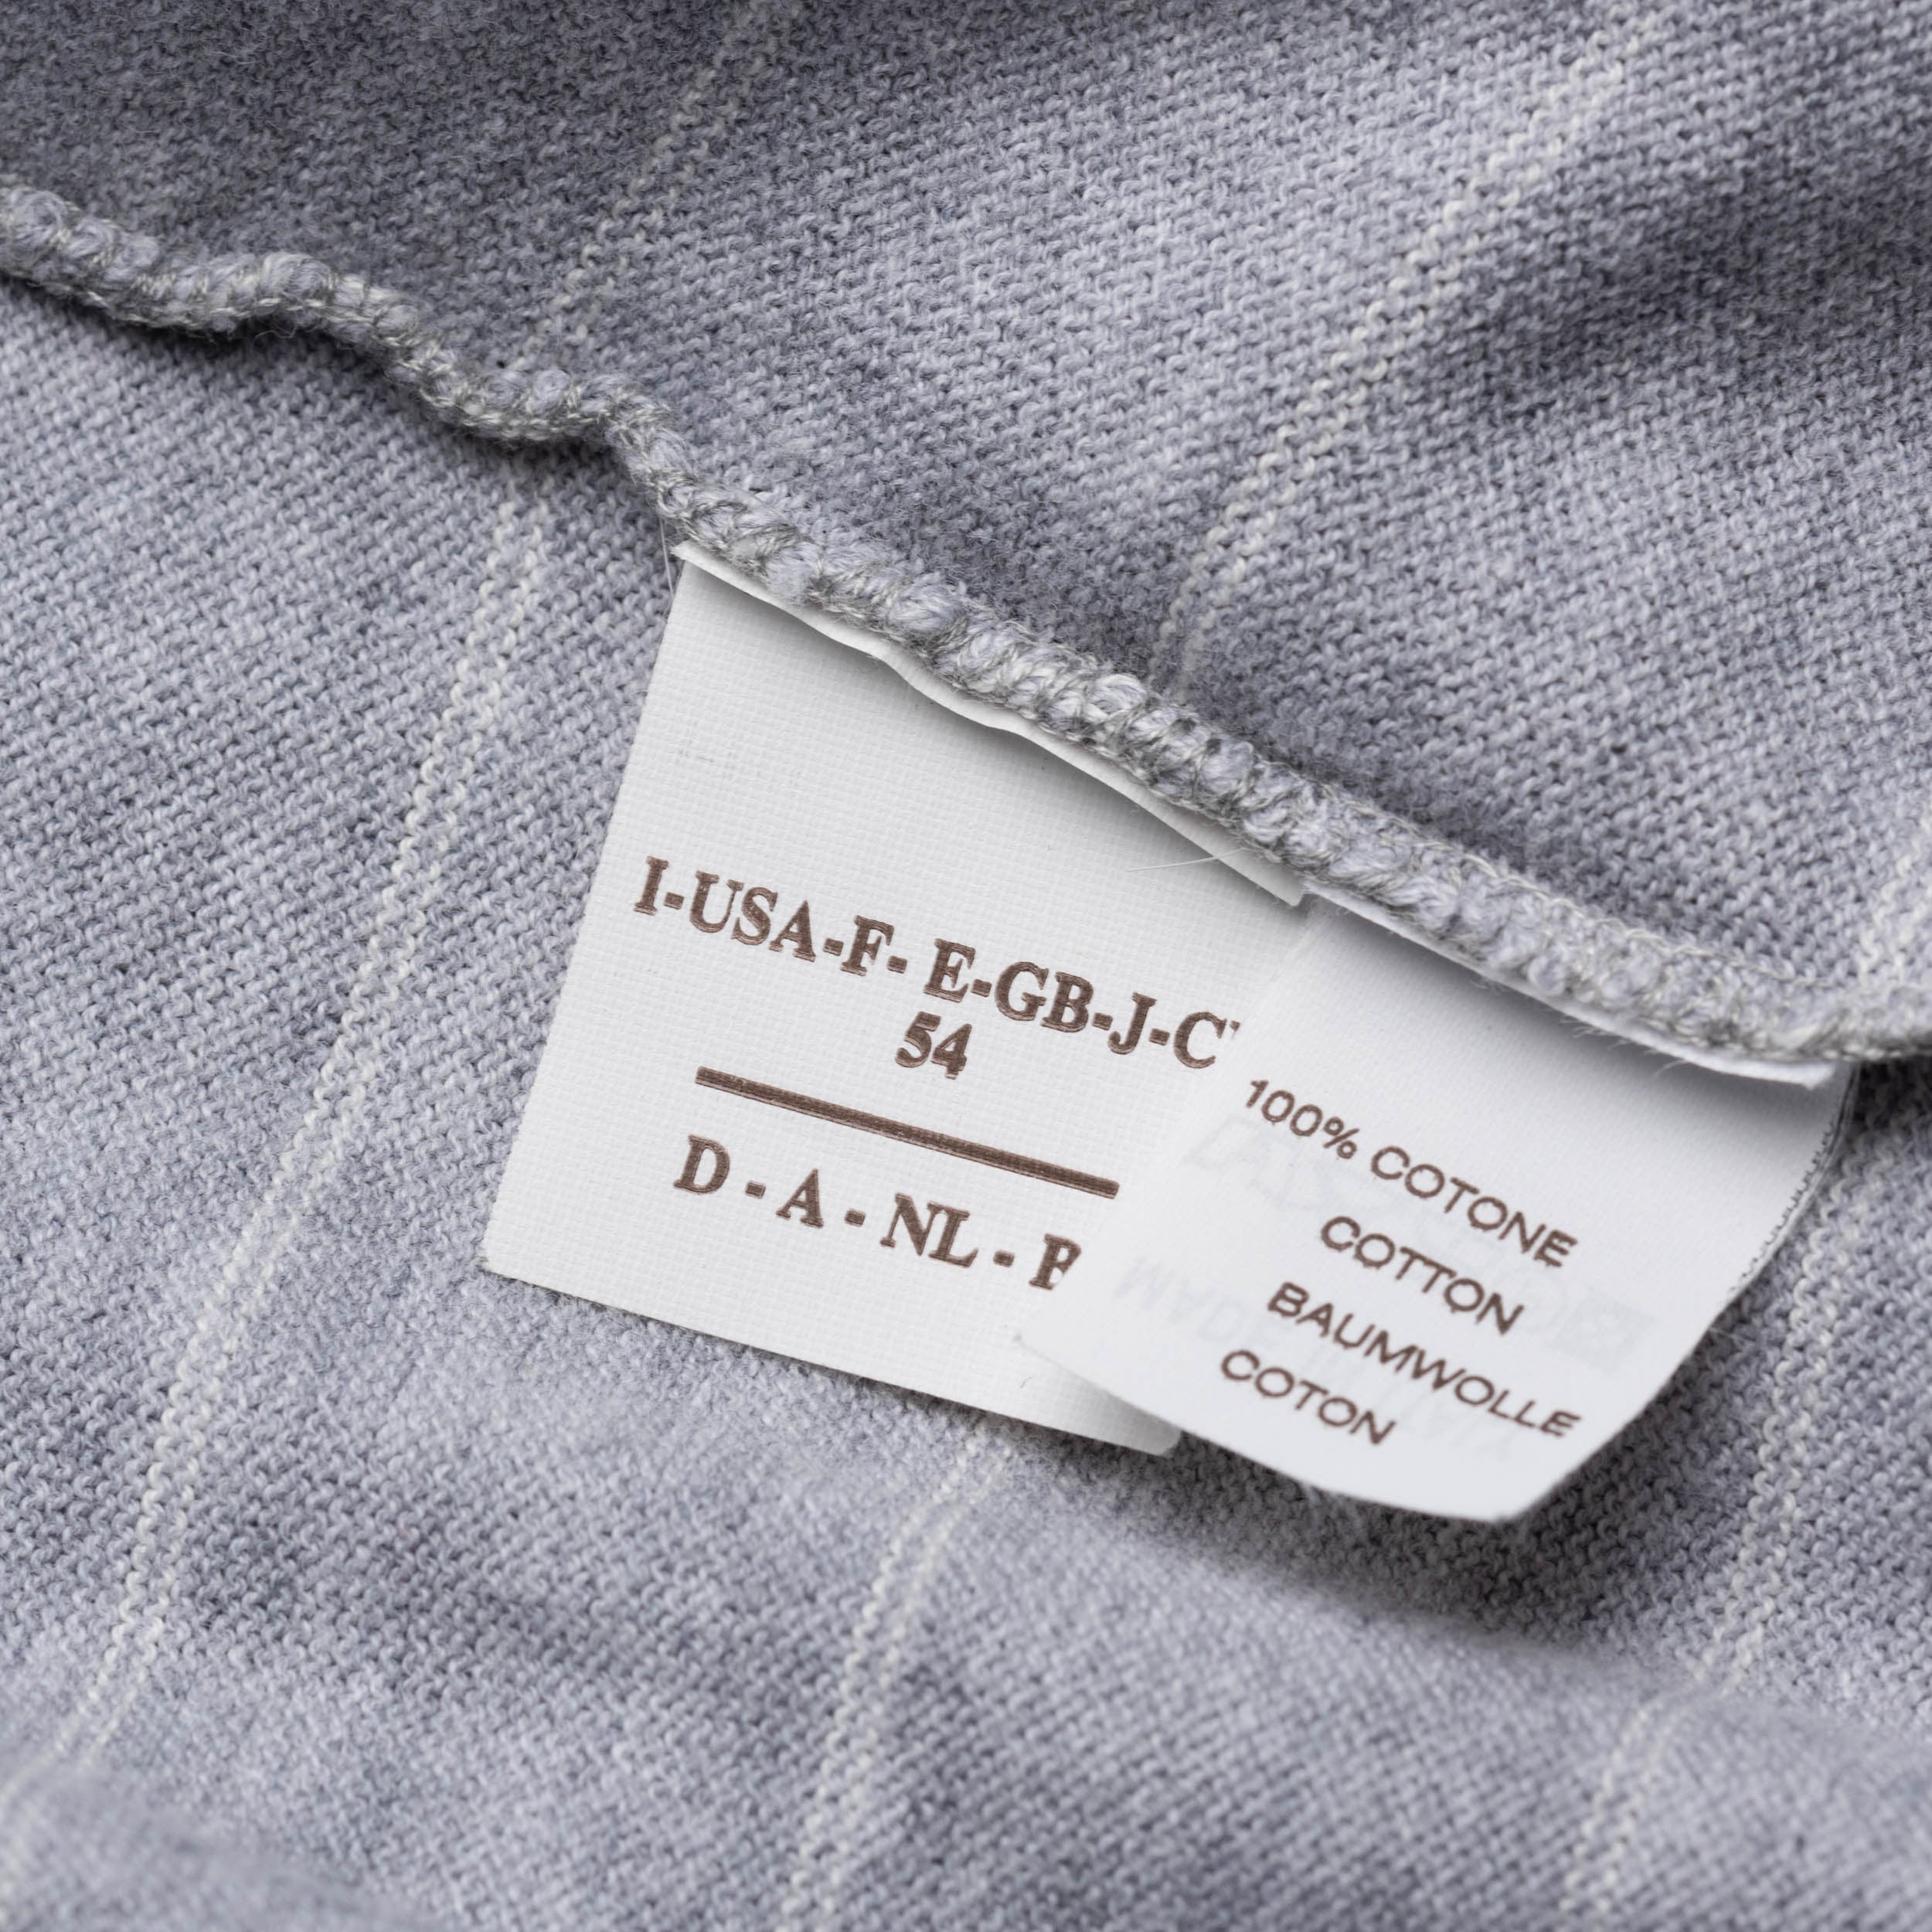 BRUNELLO CUCINELLI Gray Striped Cotton Zip-Front Cardigan Sweater EU 54 US XL